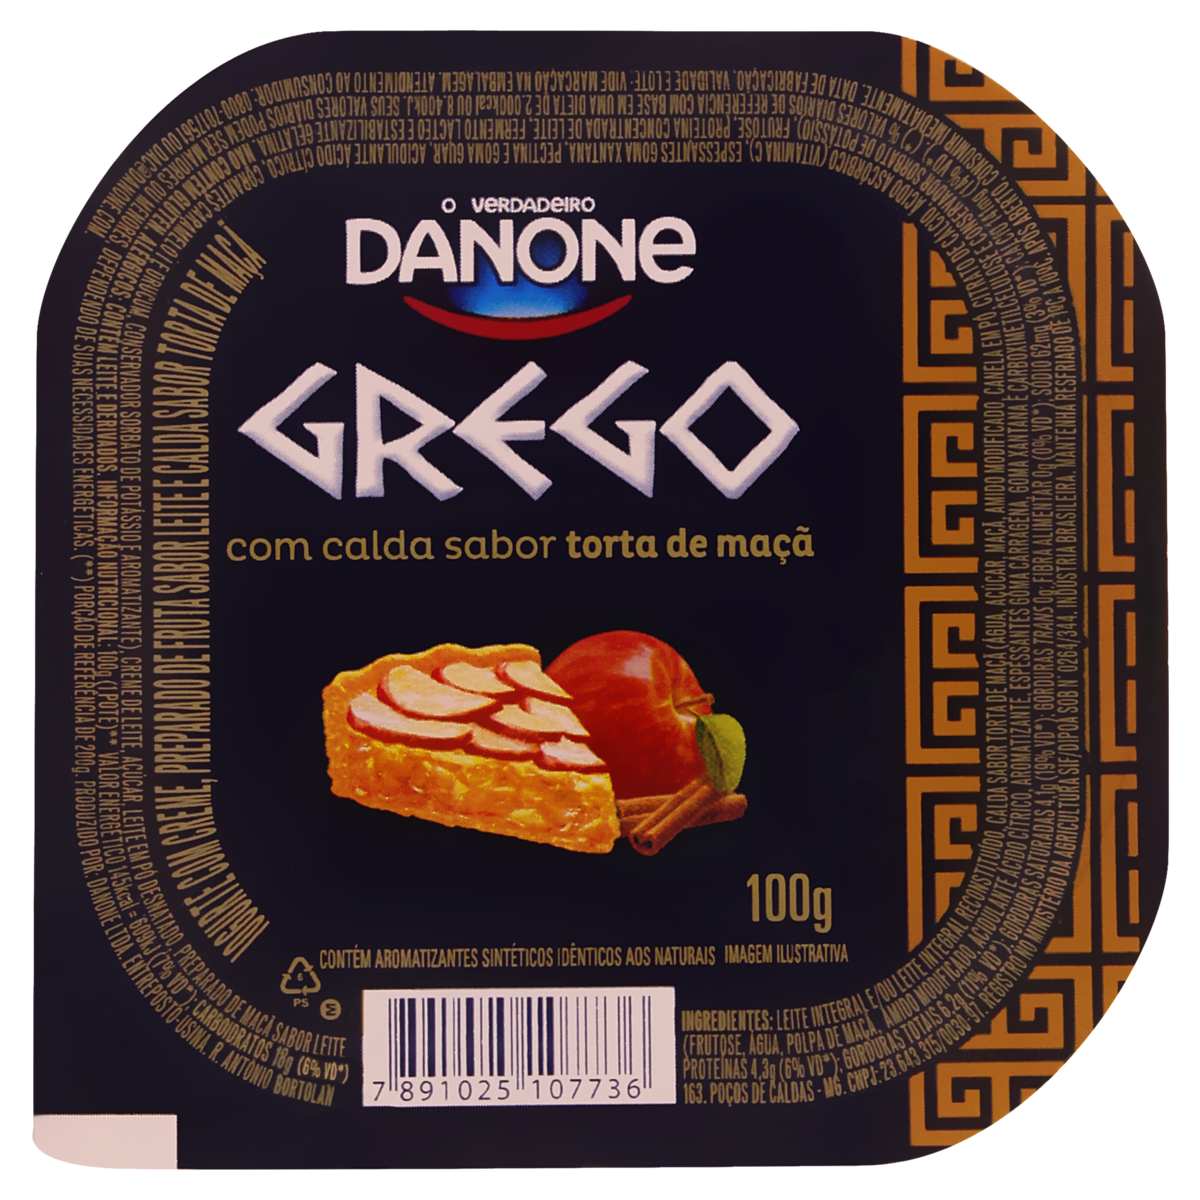 7891025107736 - IOGURTE GREGO CALDA TORTA DE MAÇÃ DANONE POTE 100G